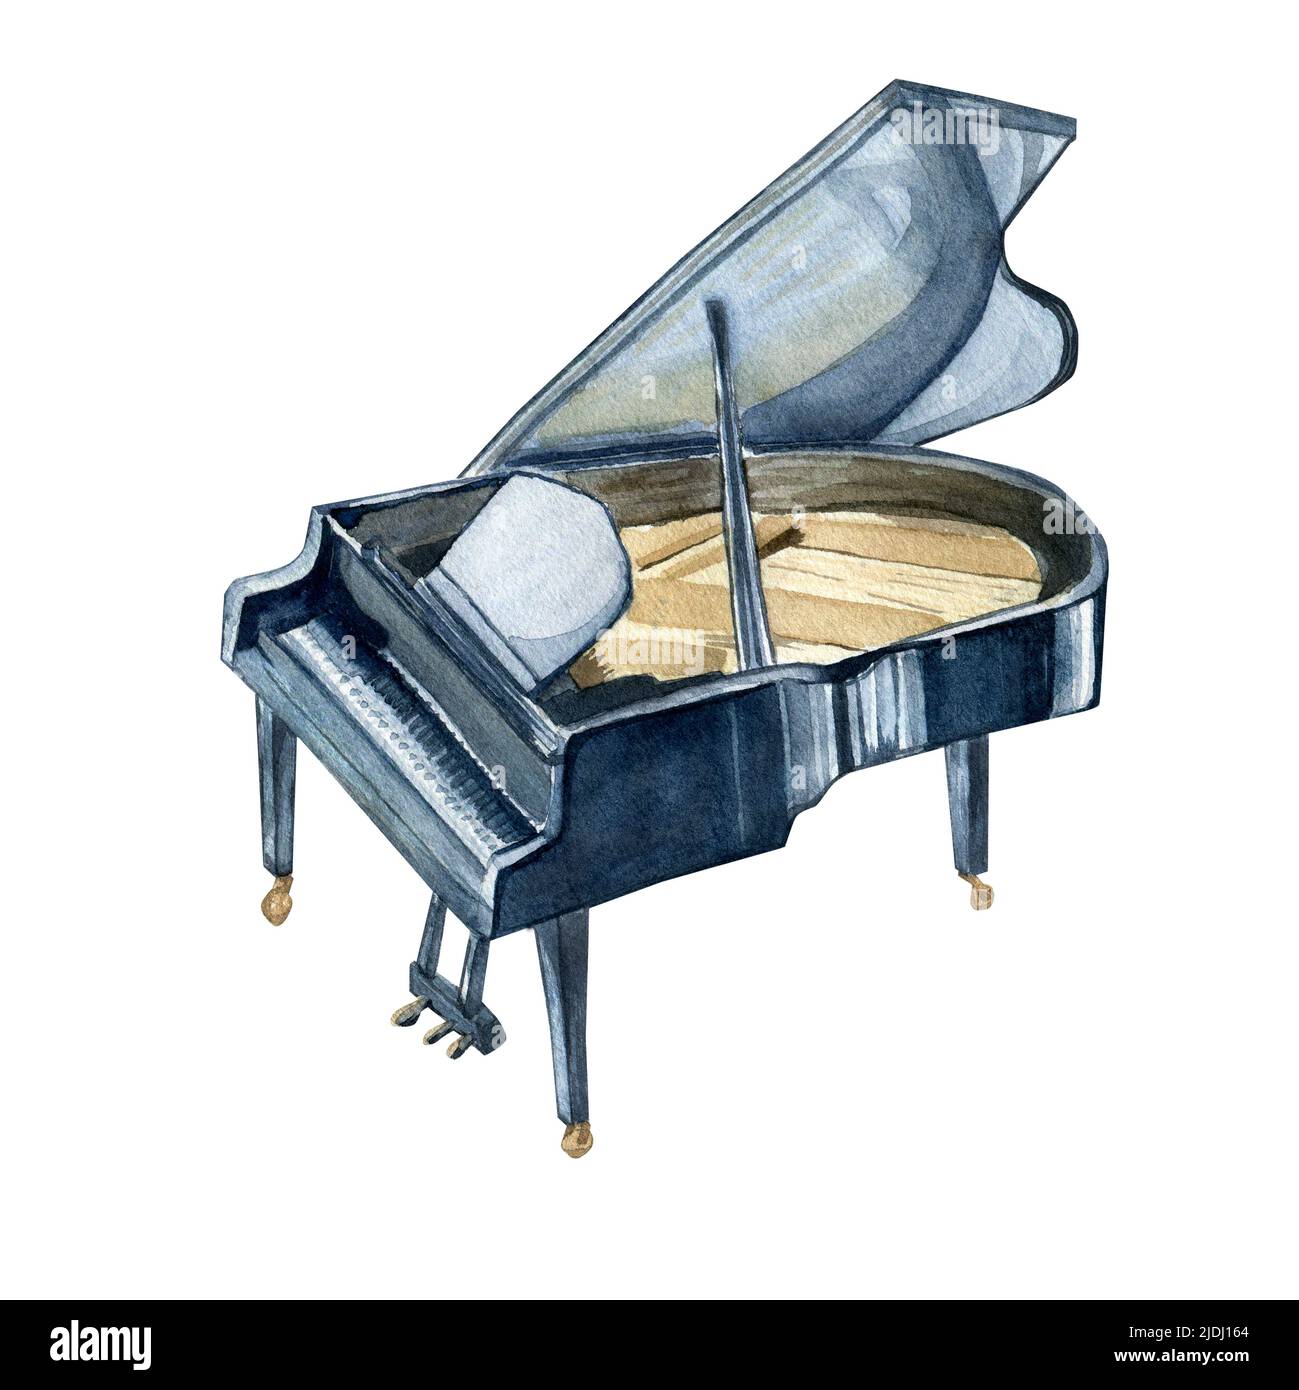 Piano abanico pintado a mano simulando de forma original un piano